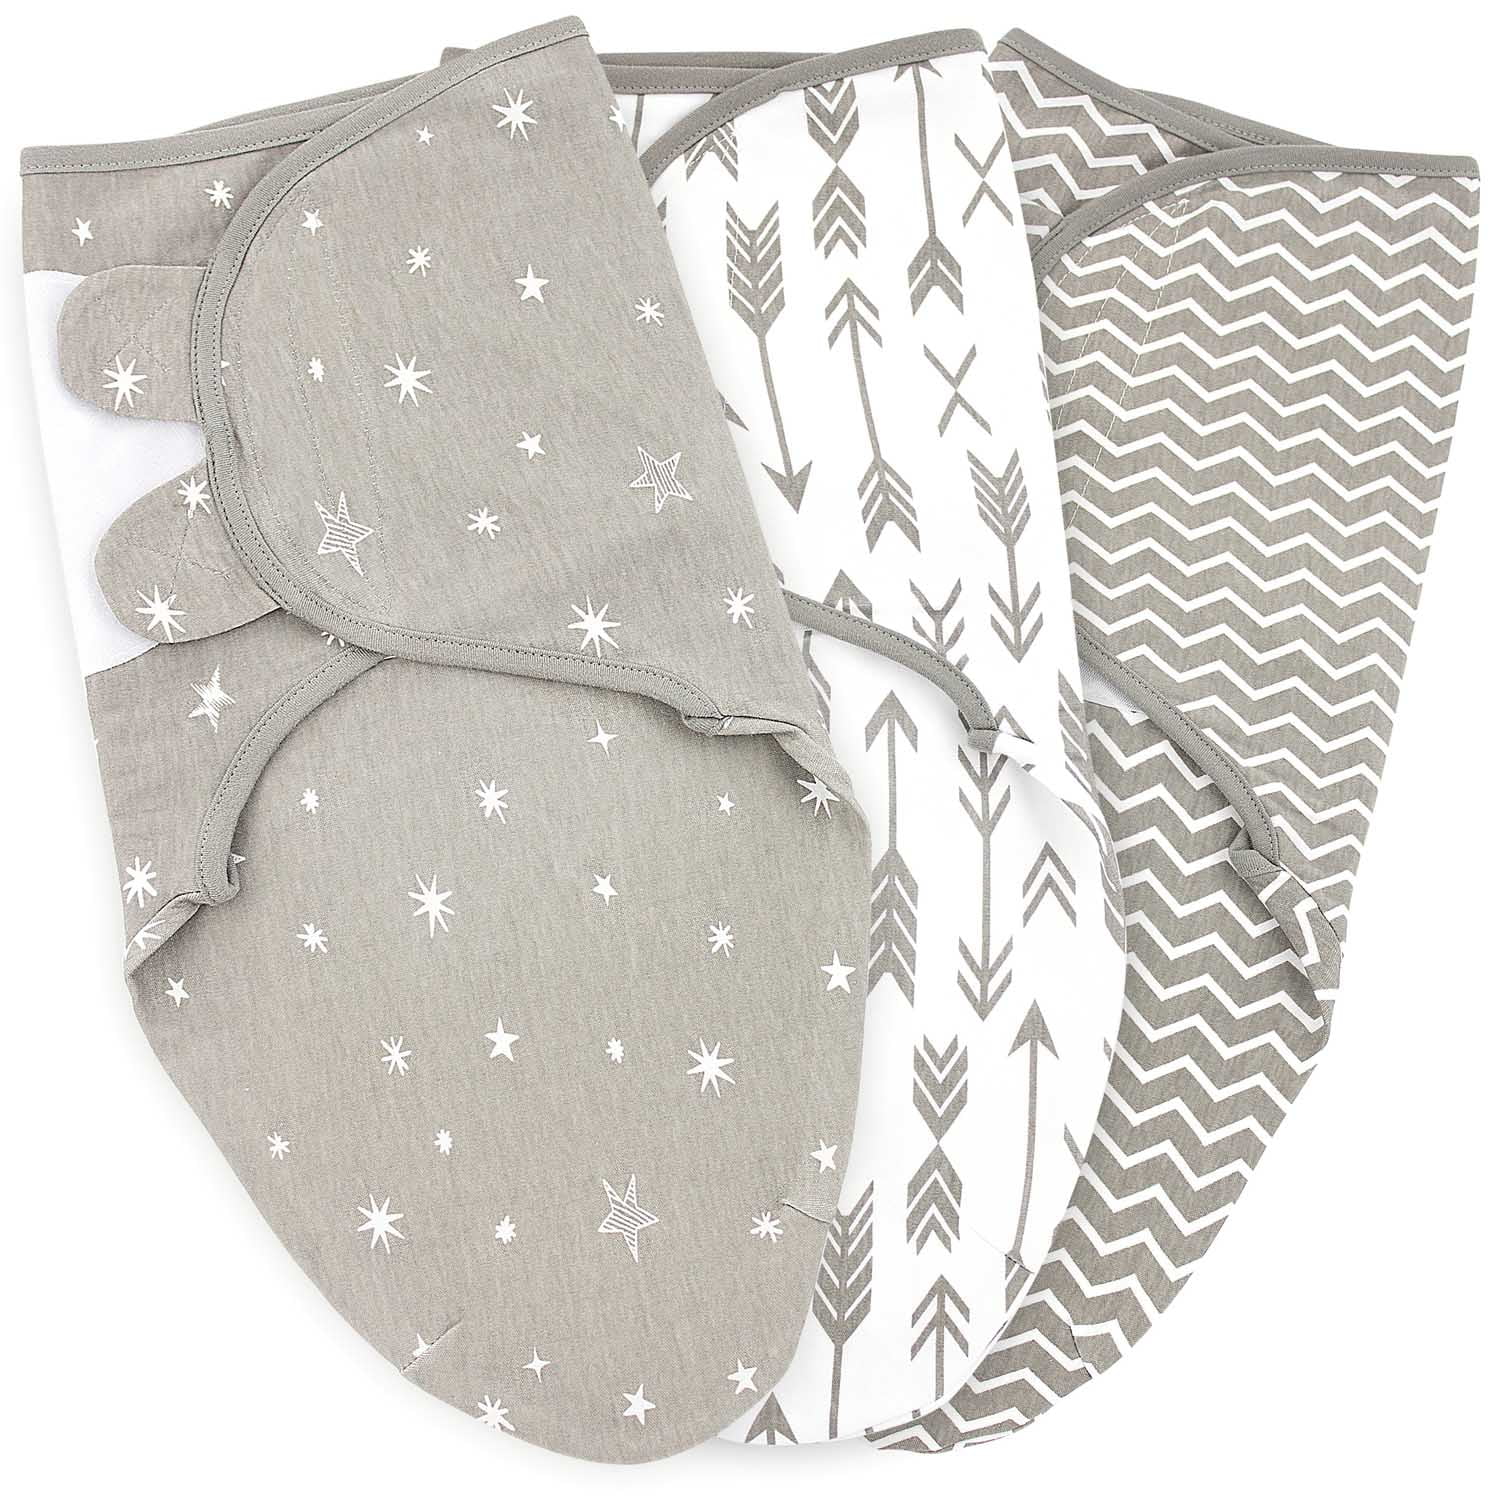 Newborn Baby Soft Swaddle Wrap 0-3 Months/Swaddling Blanket/Duvet 80x80cm Blue